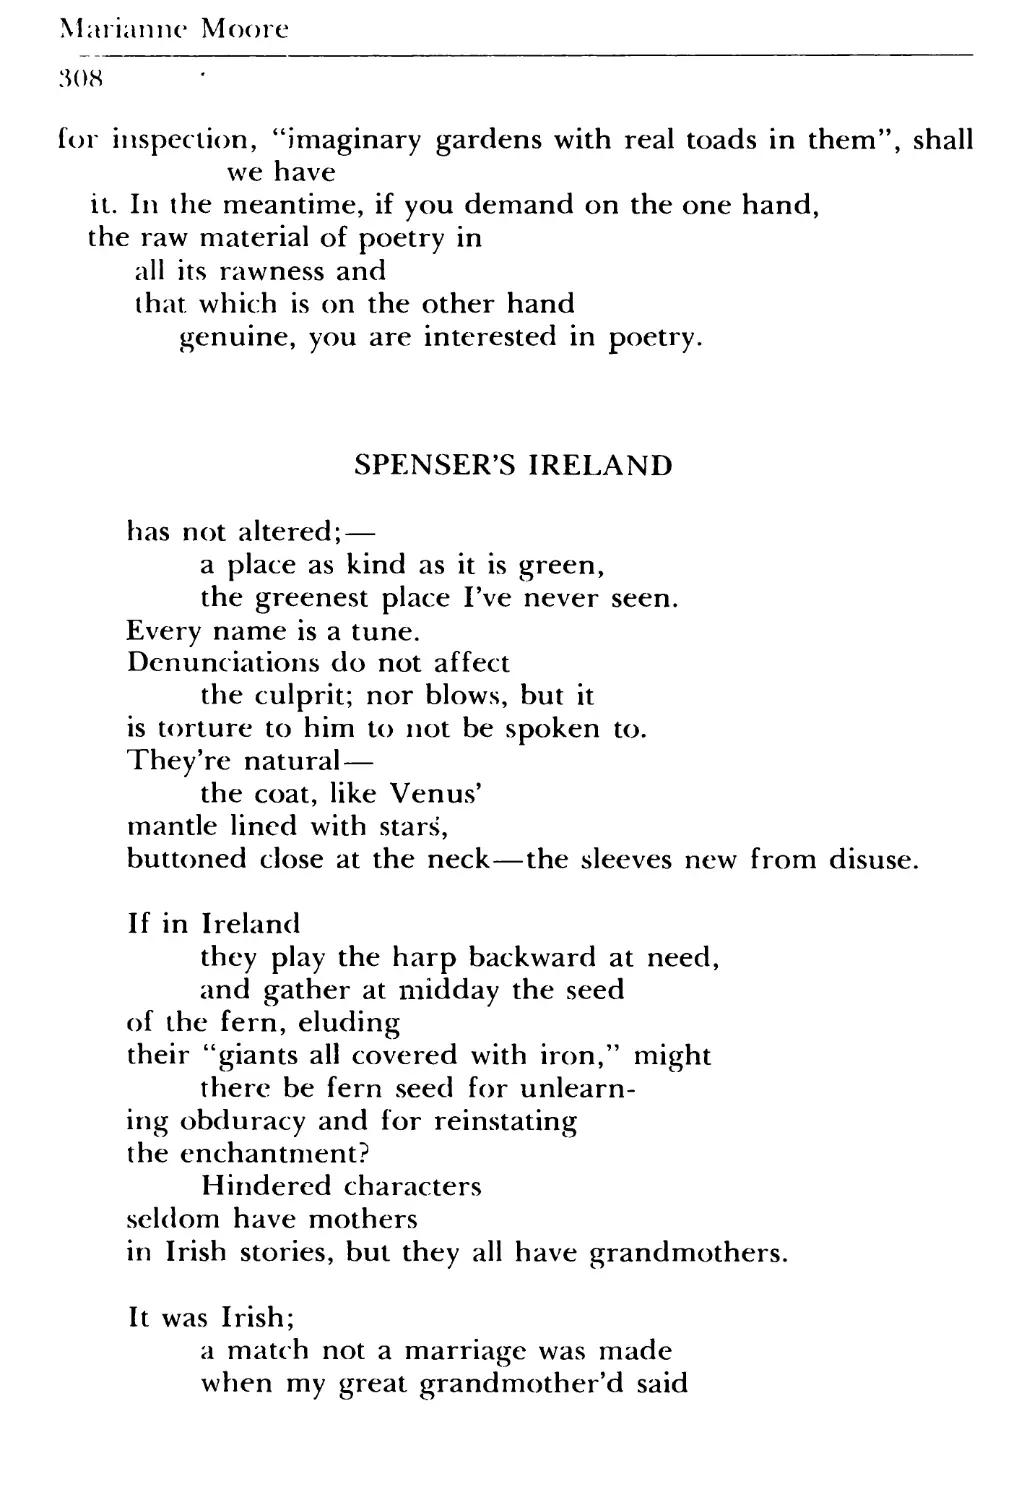 Spenser's Ireland